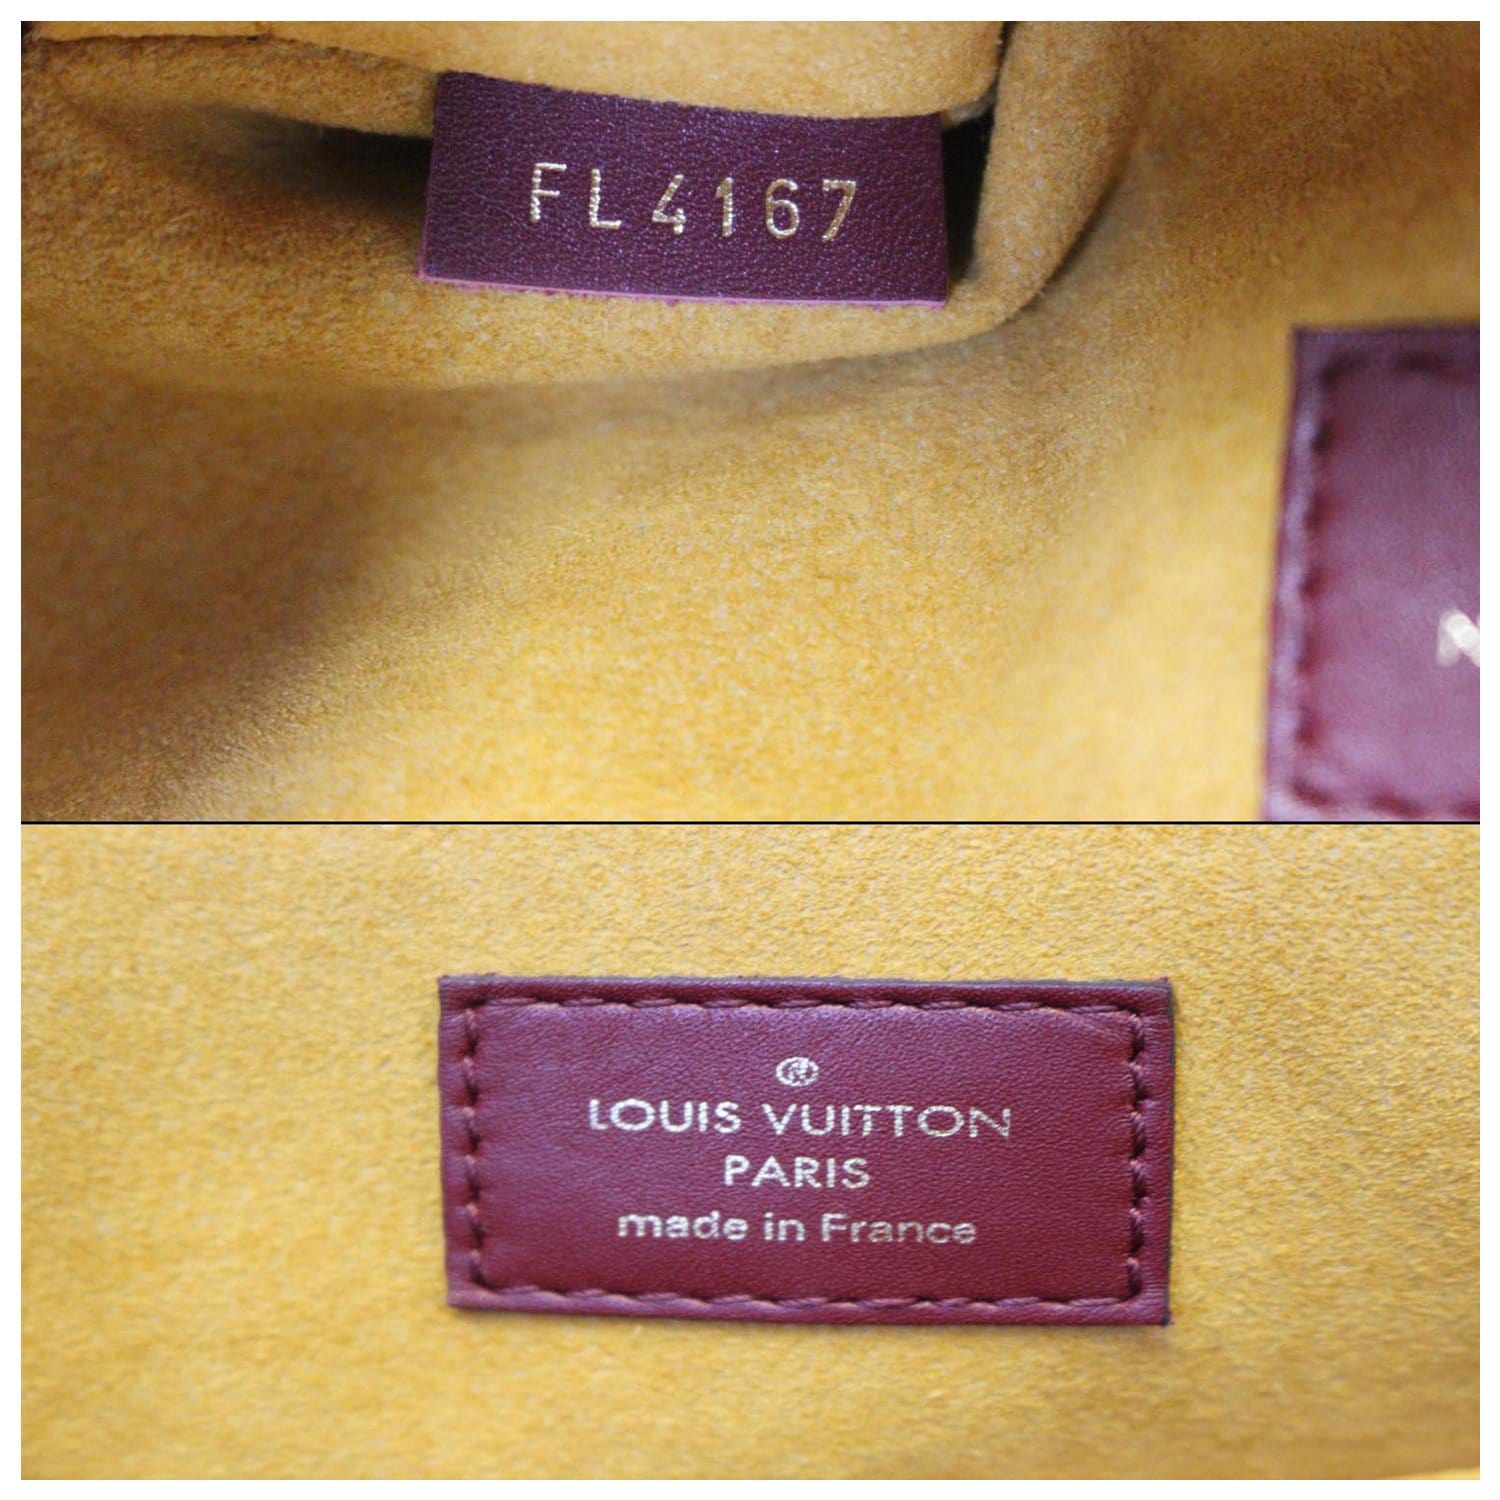 Louis Vuitton Tuileries Bag, Bragmybag